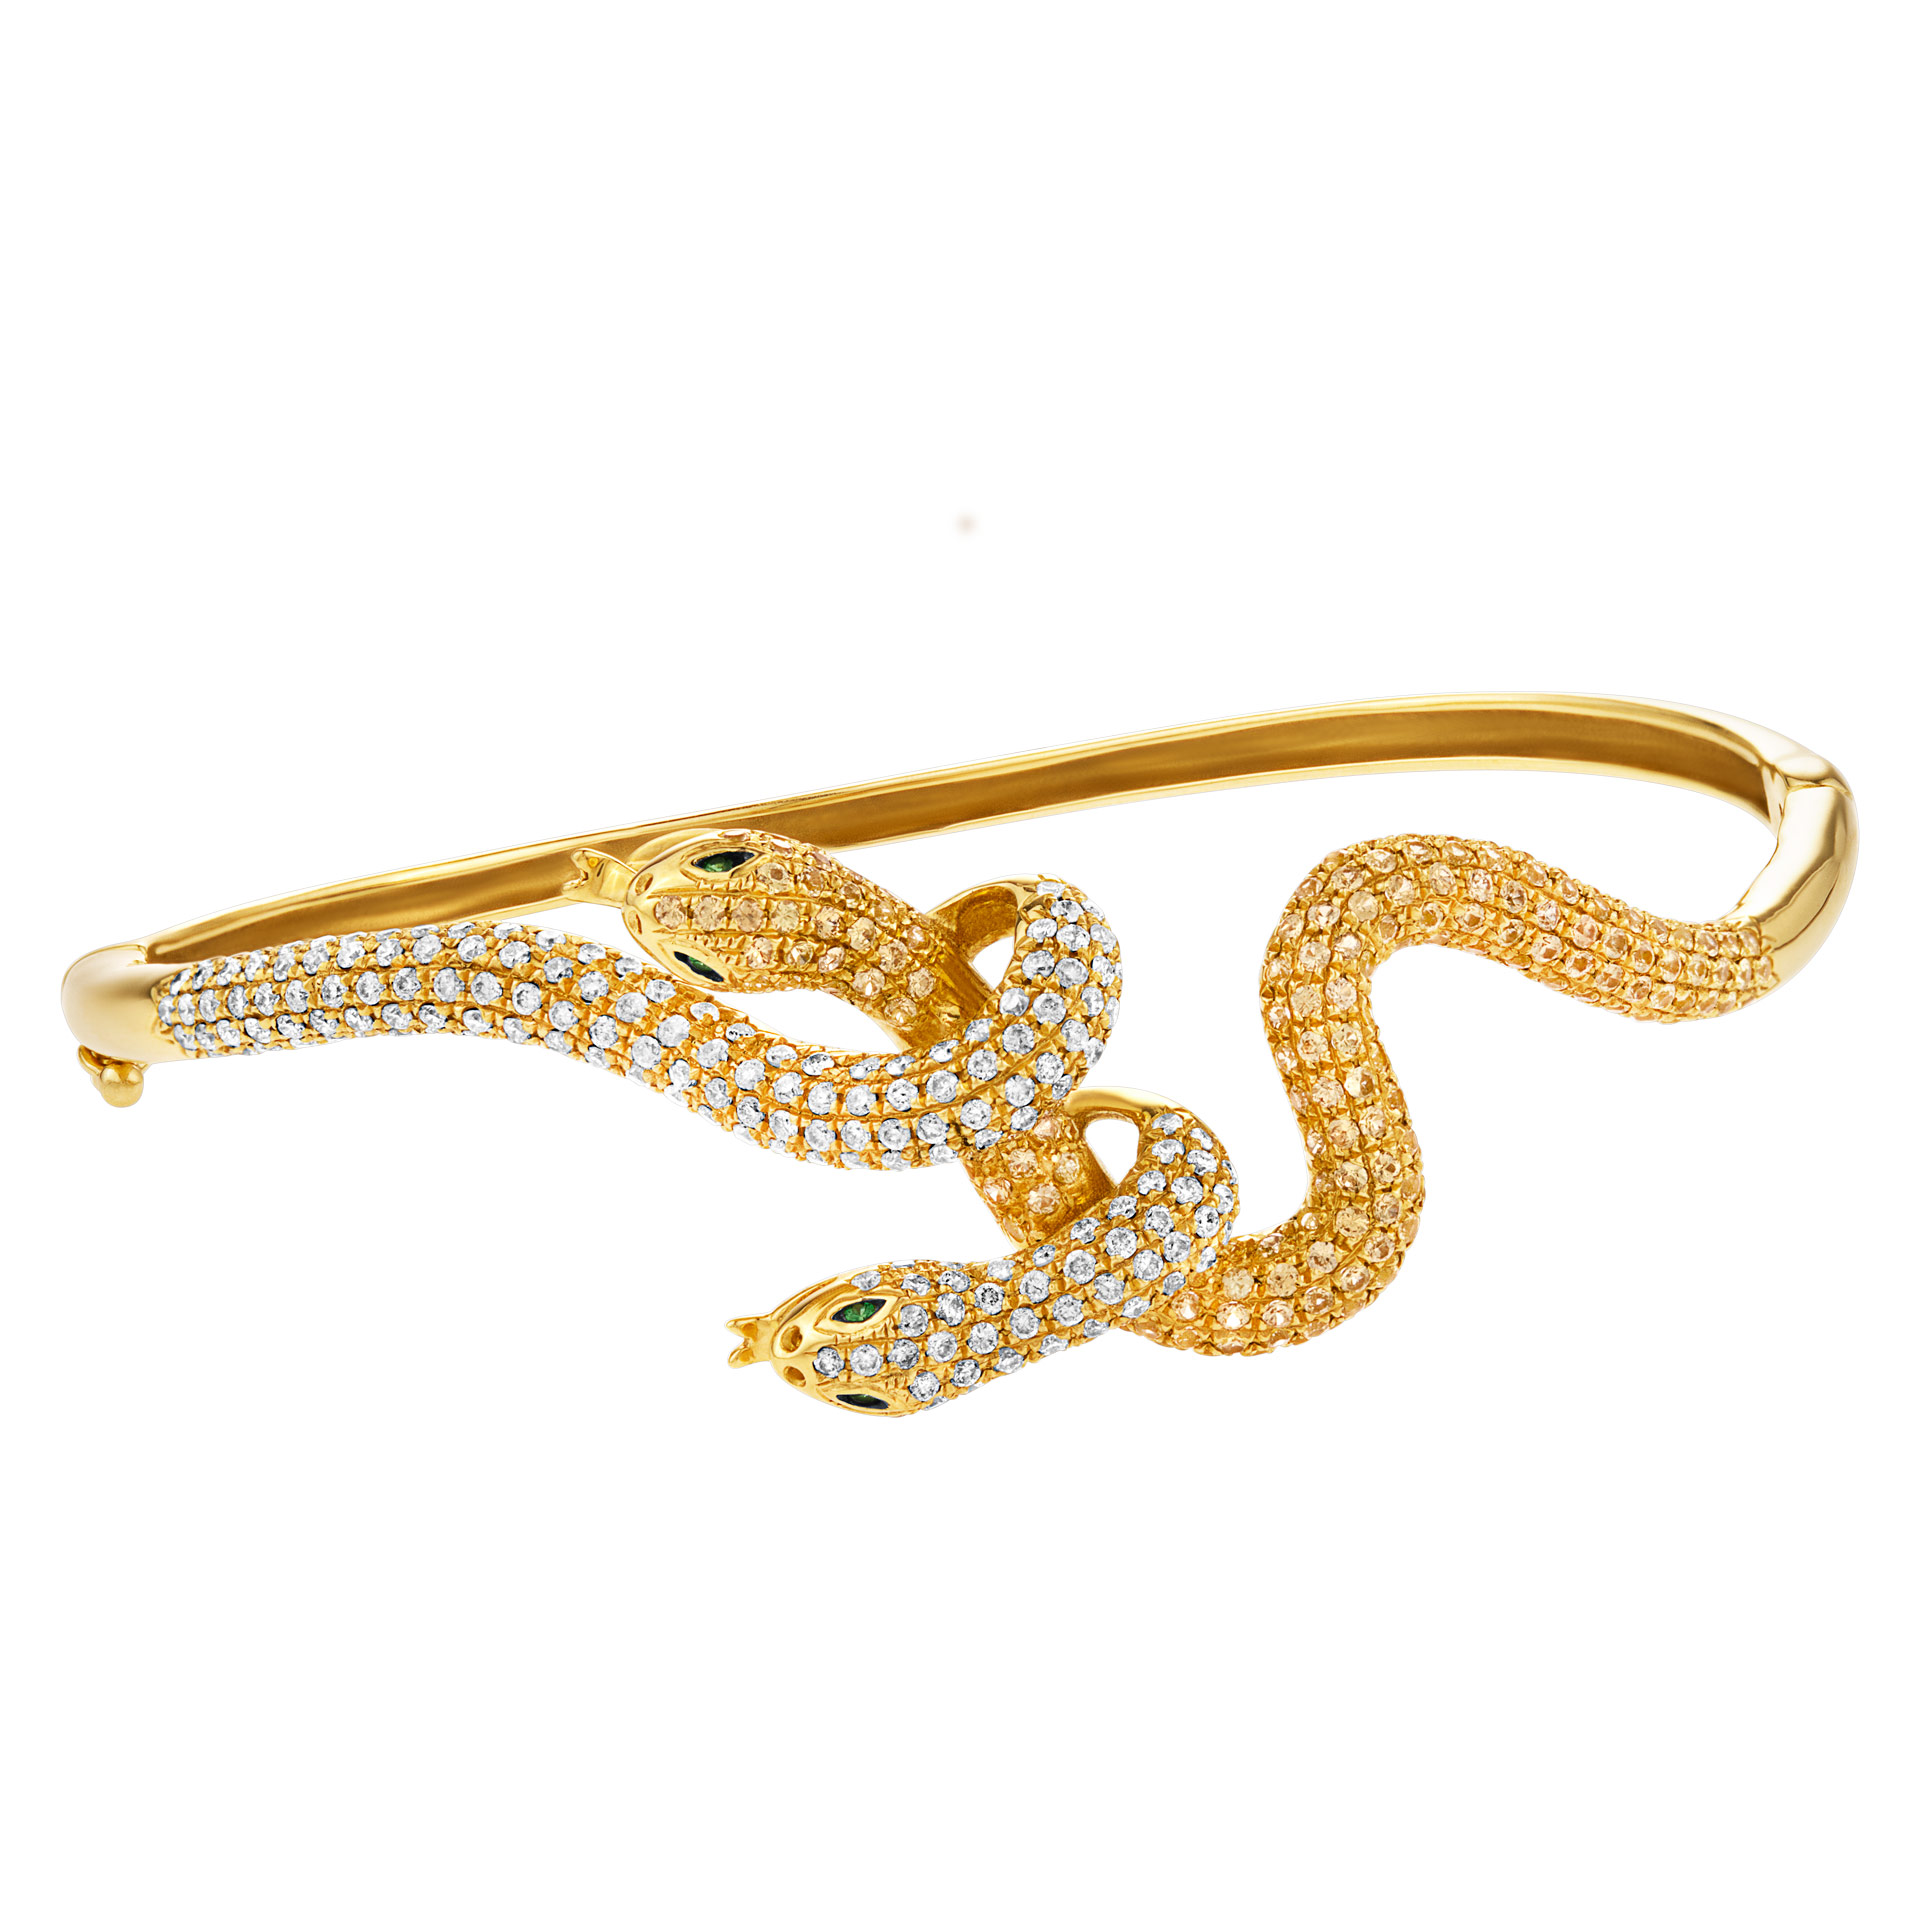 Snakes 18K gold bangle with diamonds, yellow sapphires and tsavorites image 1